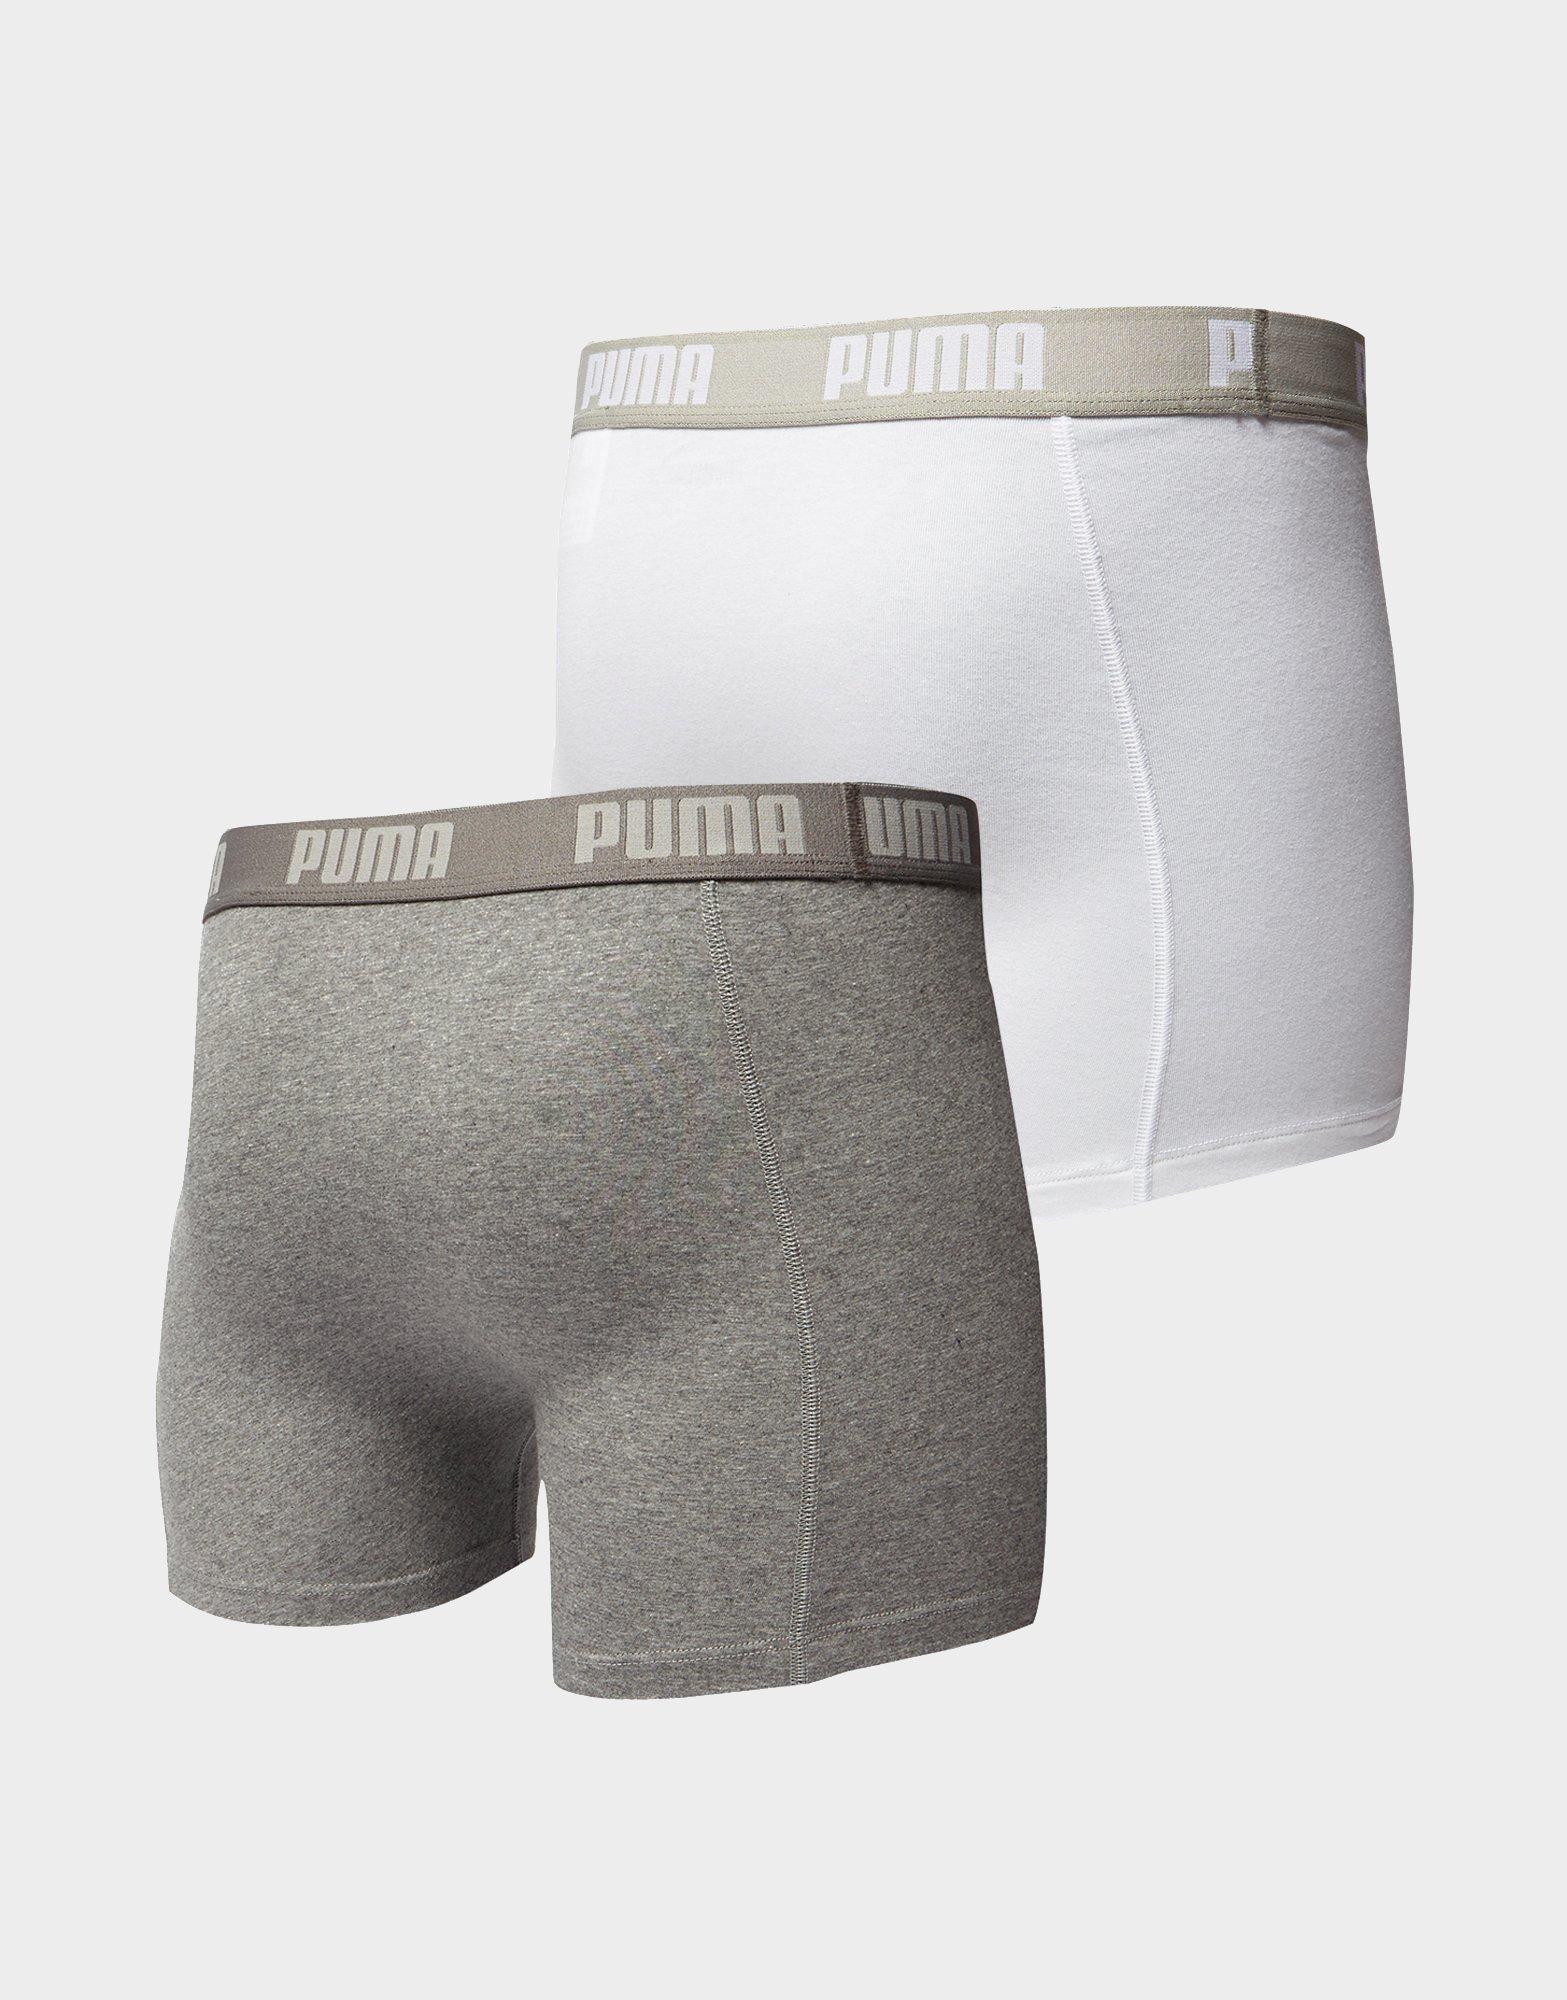 puma boxers 2 pack